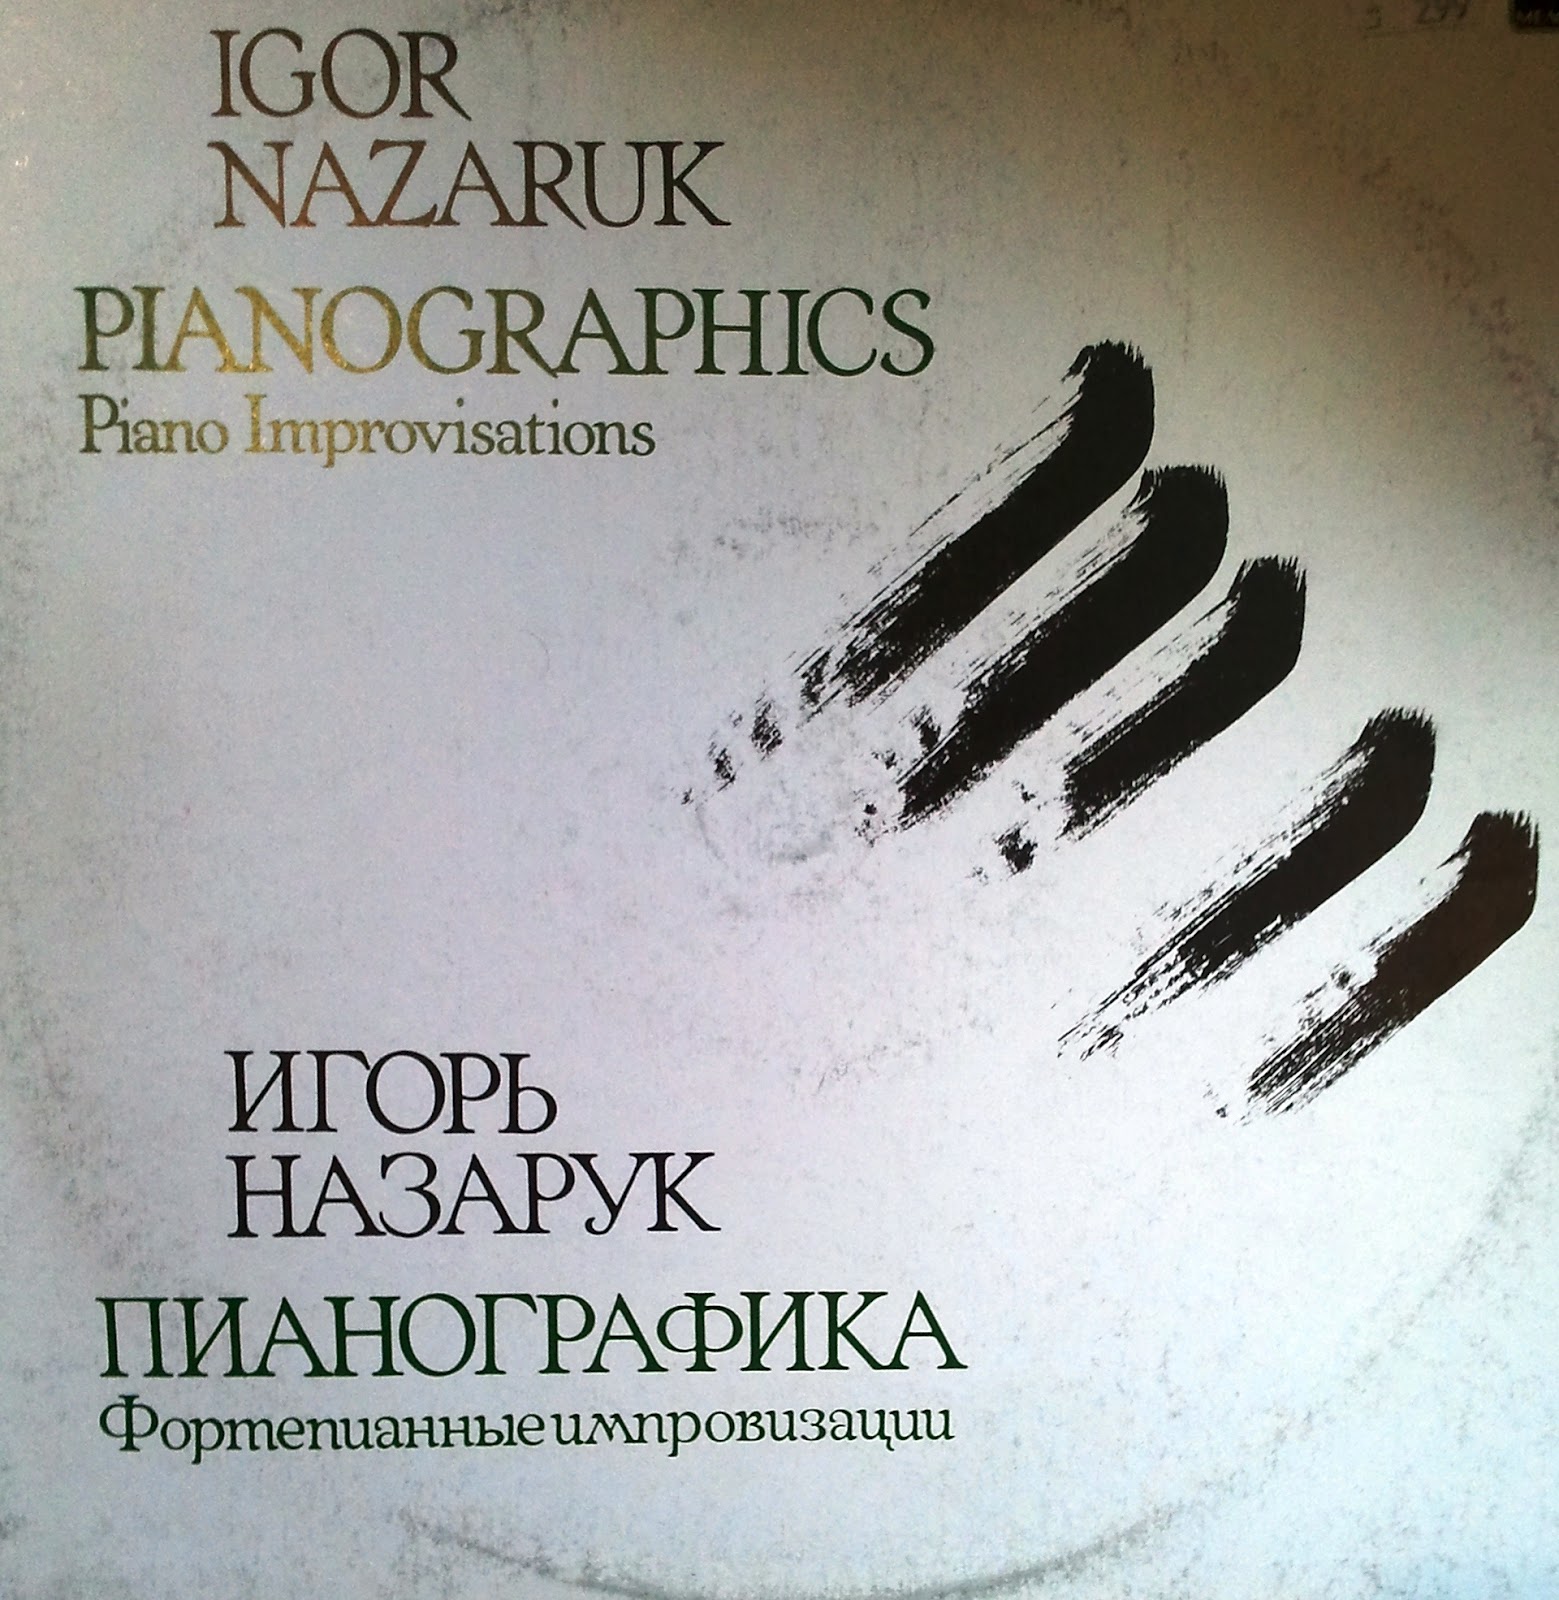 IGOR NAZARUK - Pianographics cover 